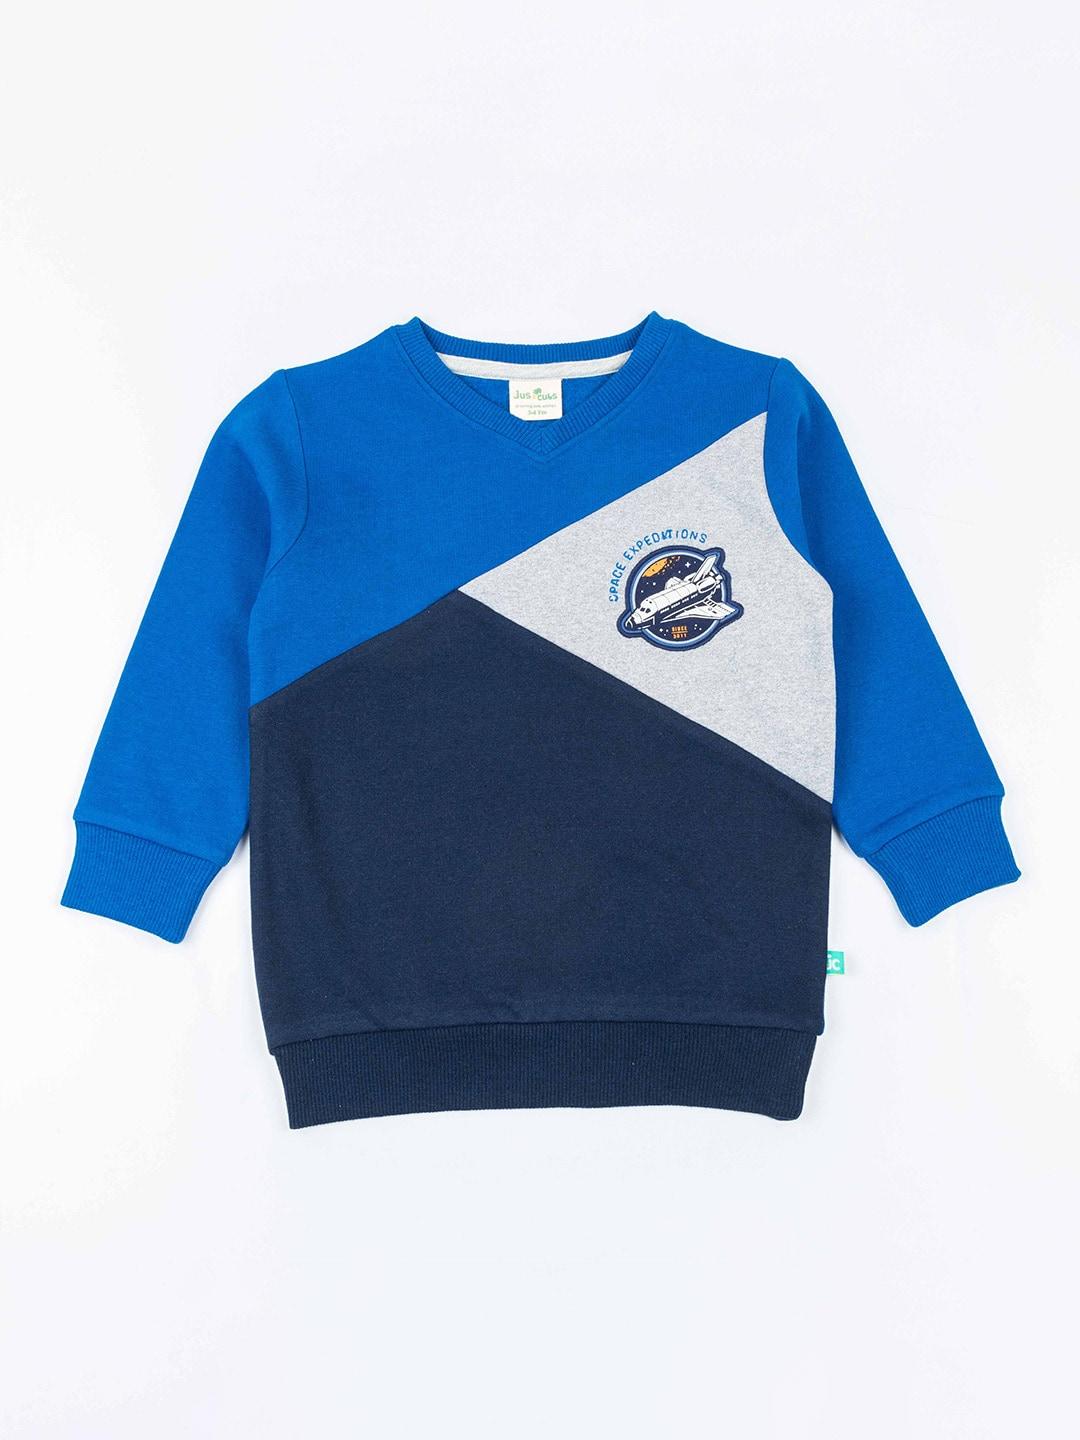 JusCubs Boys Navy Blue & Blue Colourblocked Cotton Sweatshirt